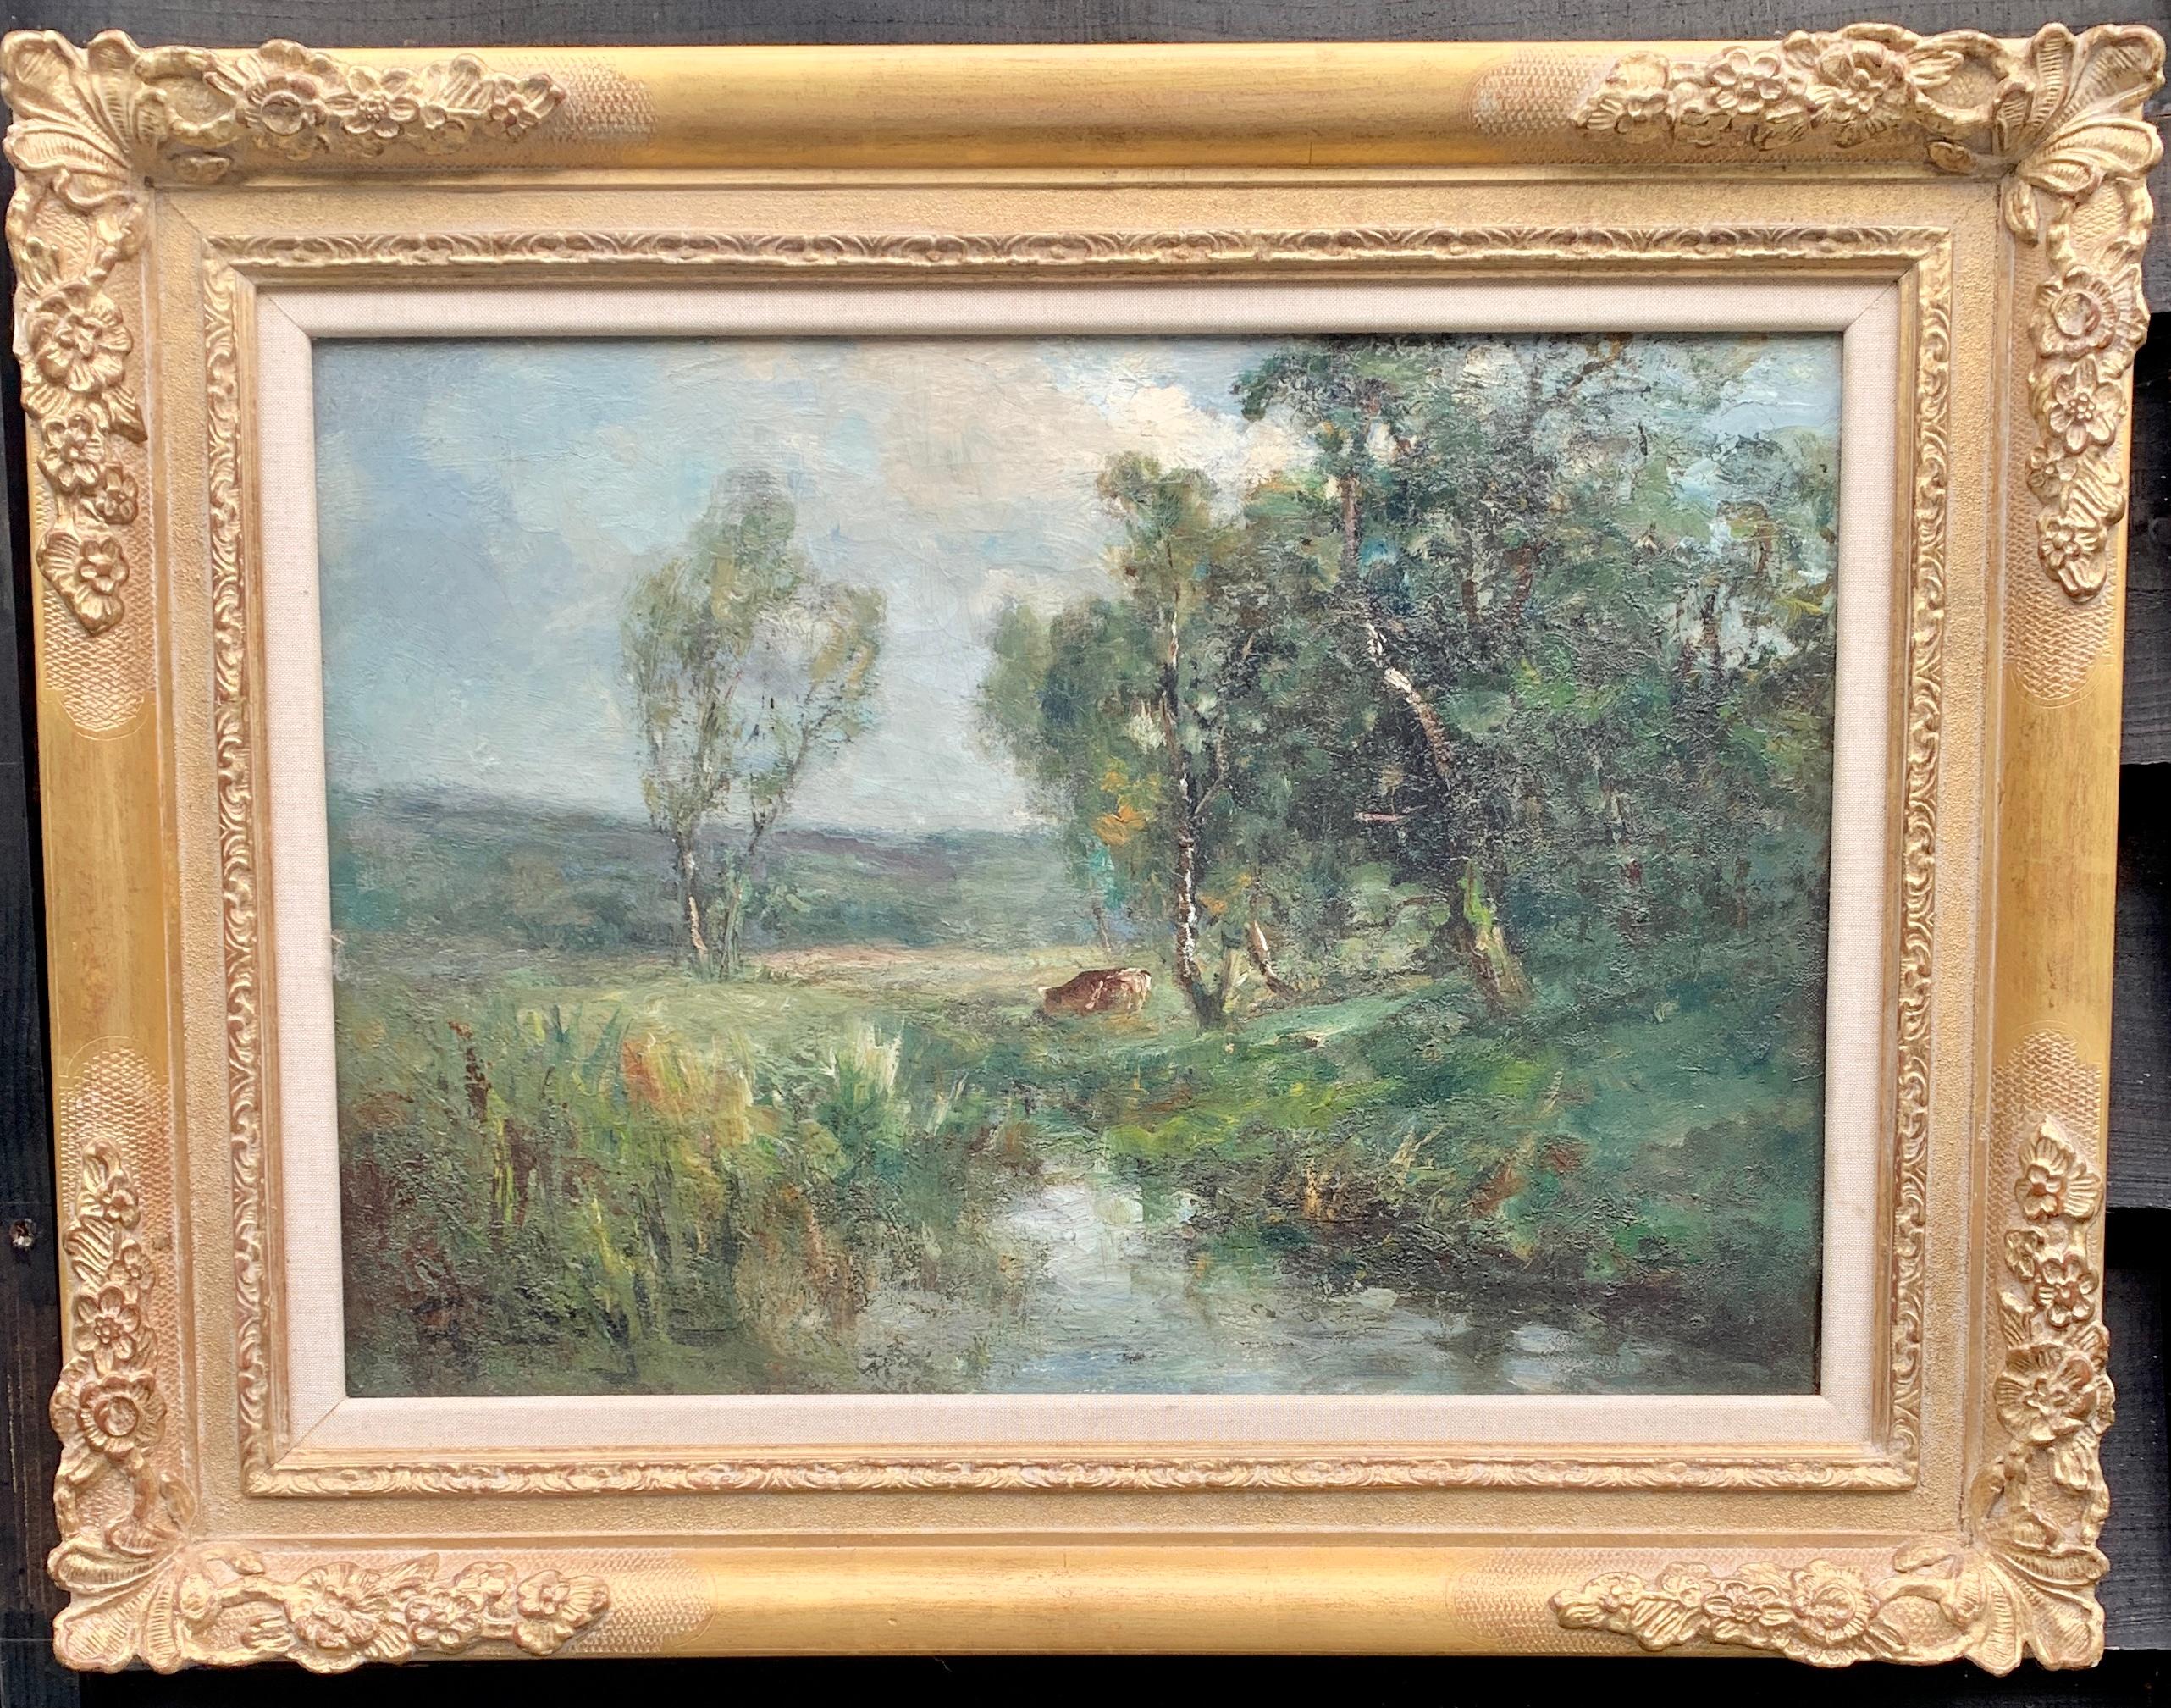 George Boyle Landscape Painting - 19th century English impressionist scene of the Barbizon forest